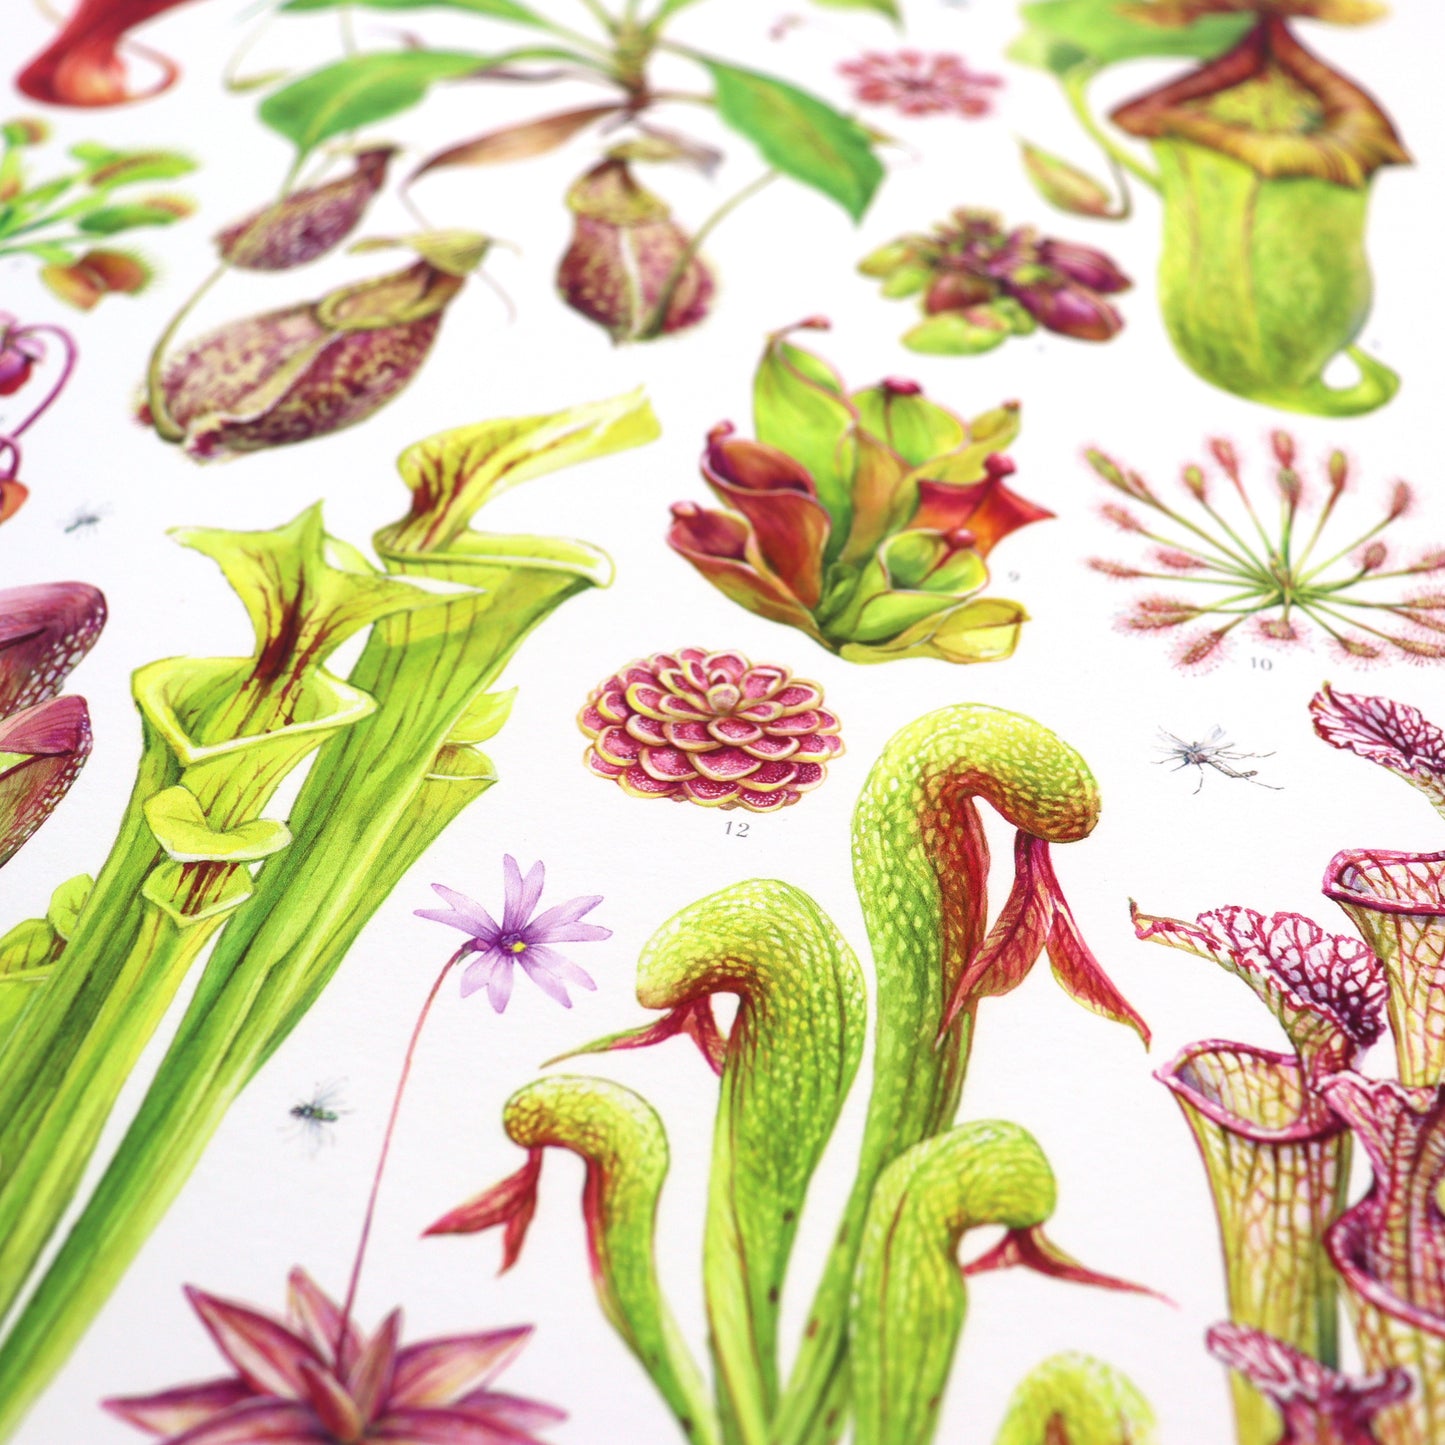 Carnivorous Plants Print